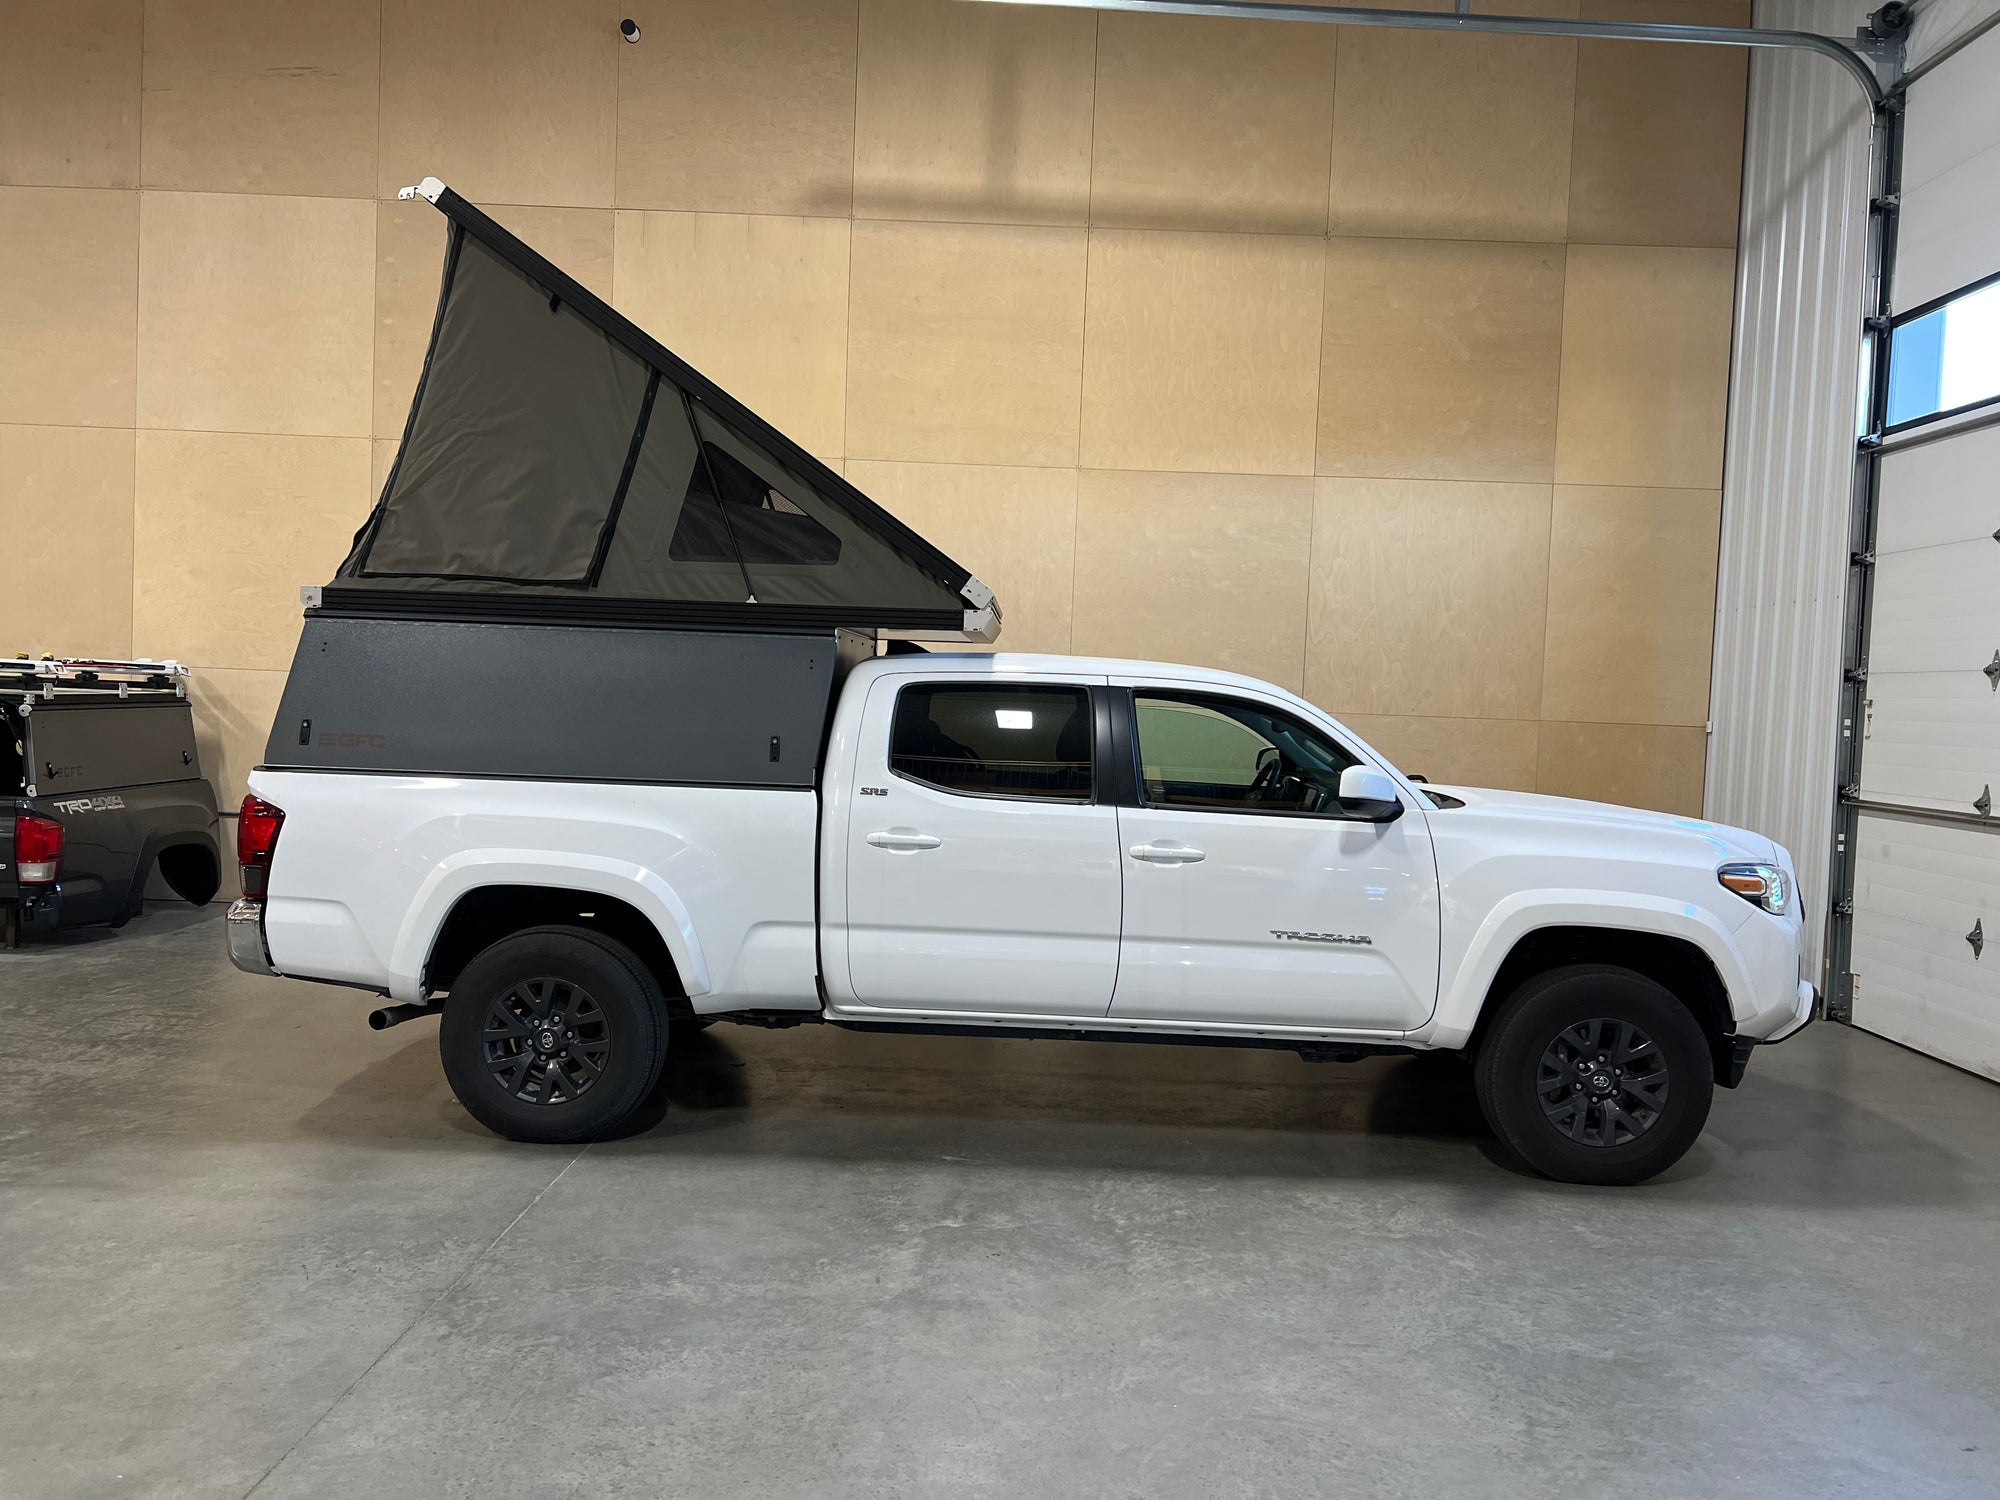 2020 Toyota Tacoma Camper - Build #5314